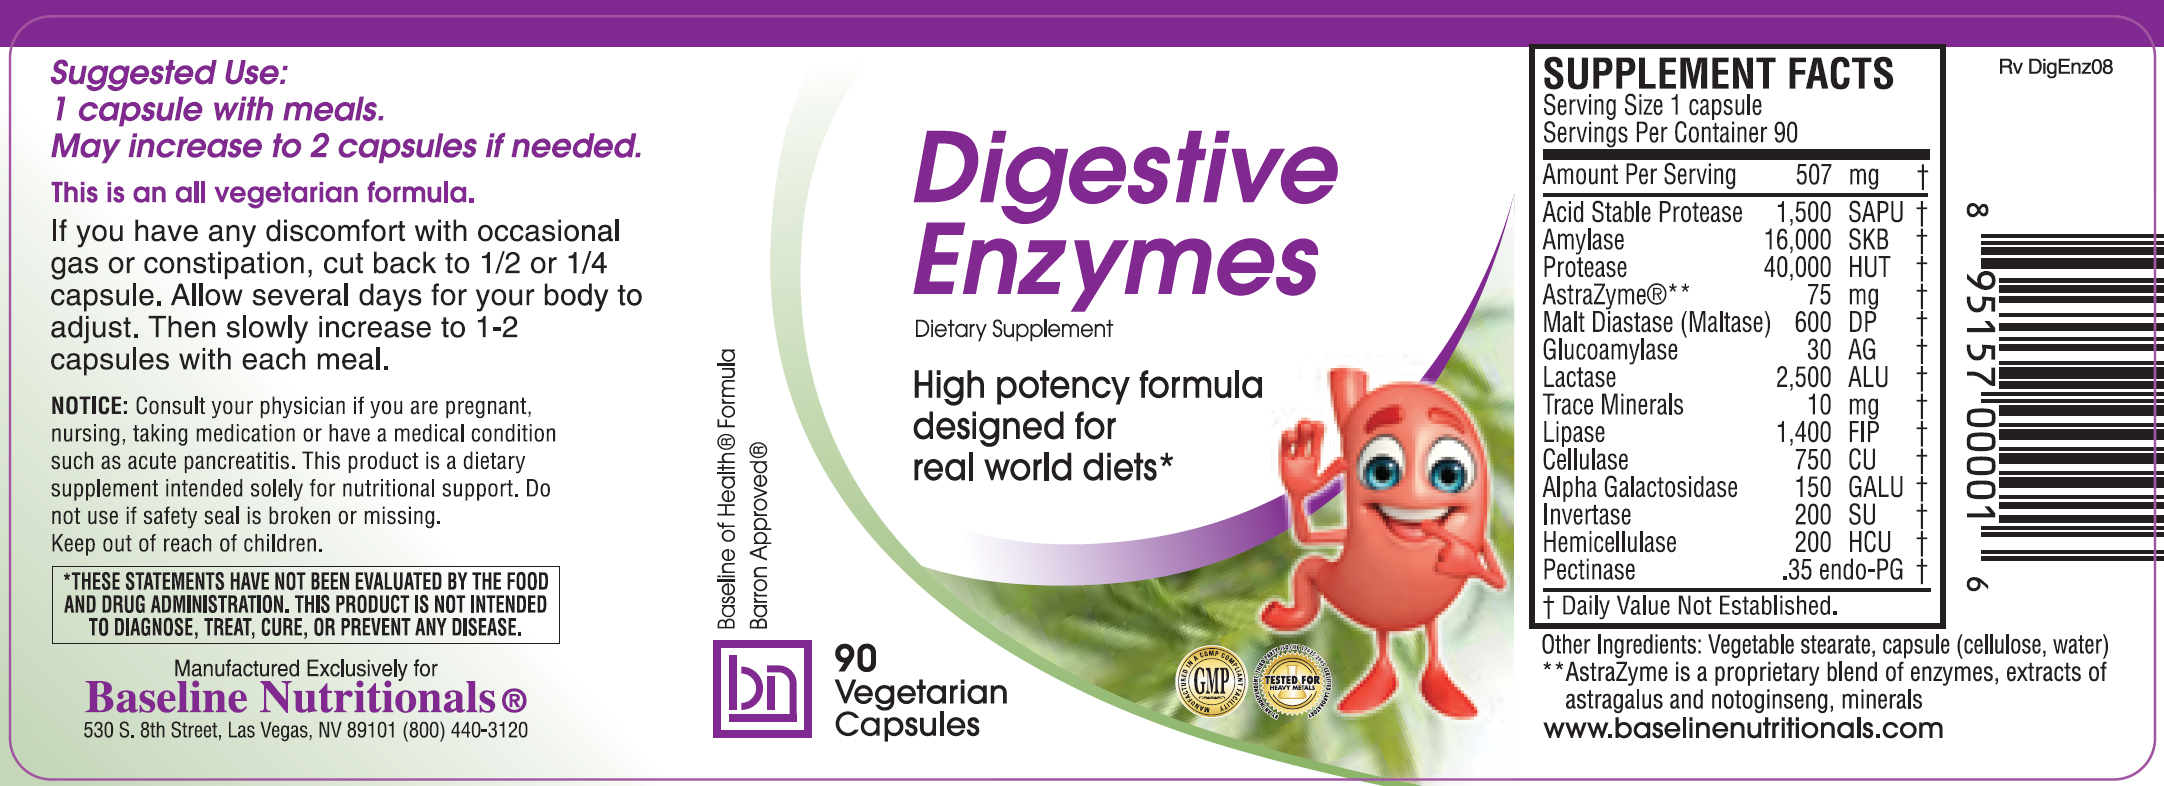 digestive-enzymes